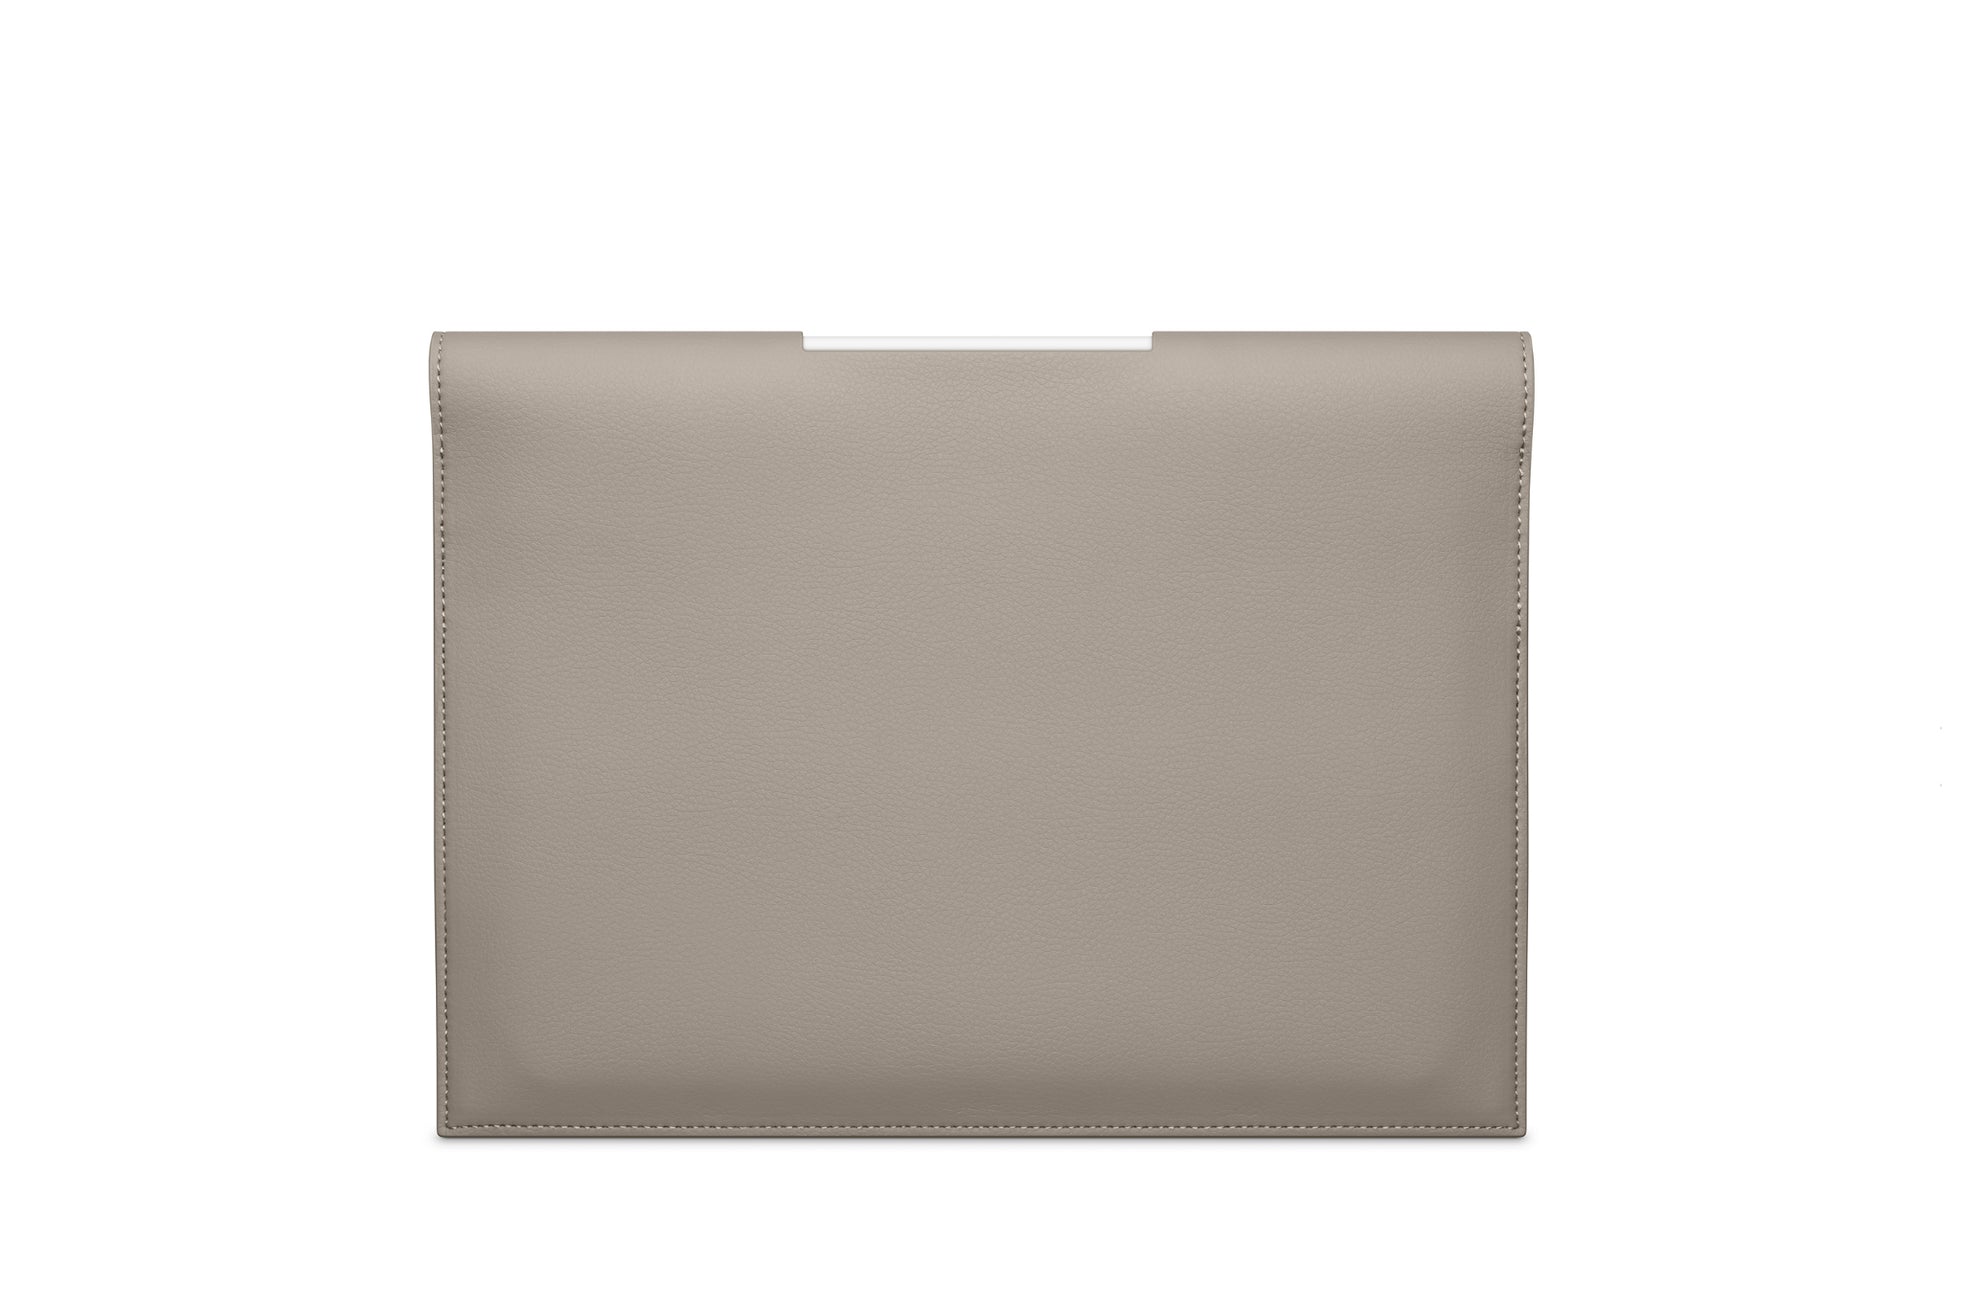 The iPad Portfolio 12.9-inch - Sample Sale in Technik-Leather in Stone image 2